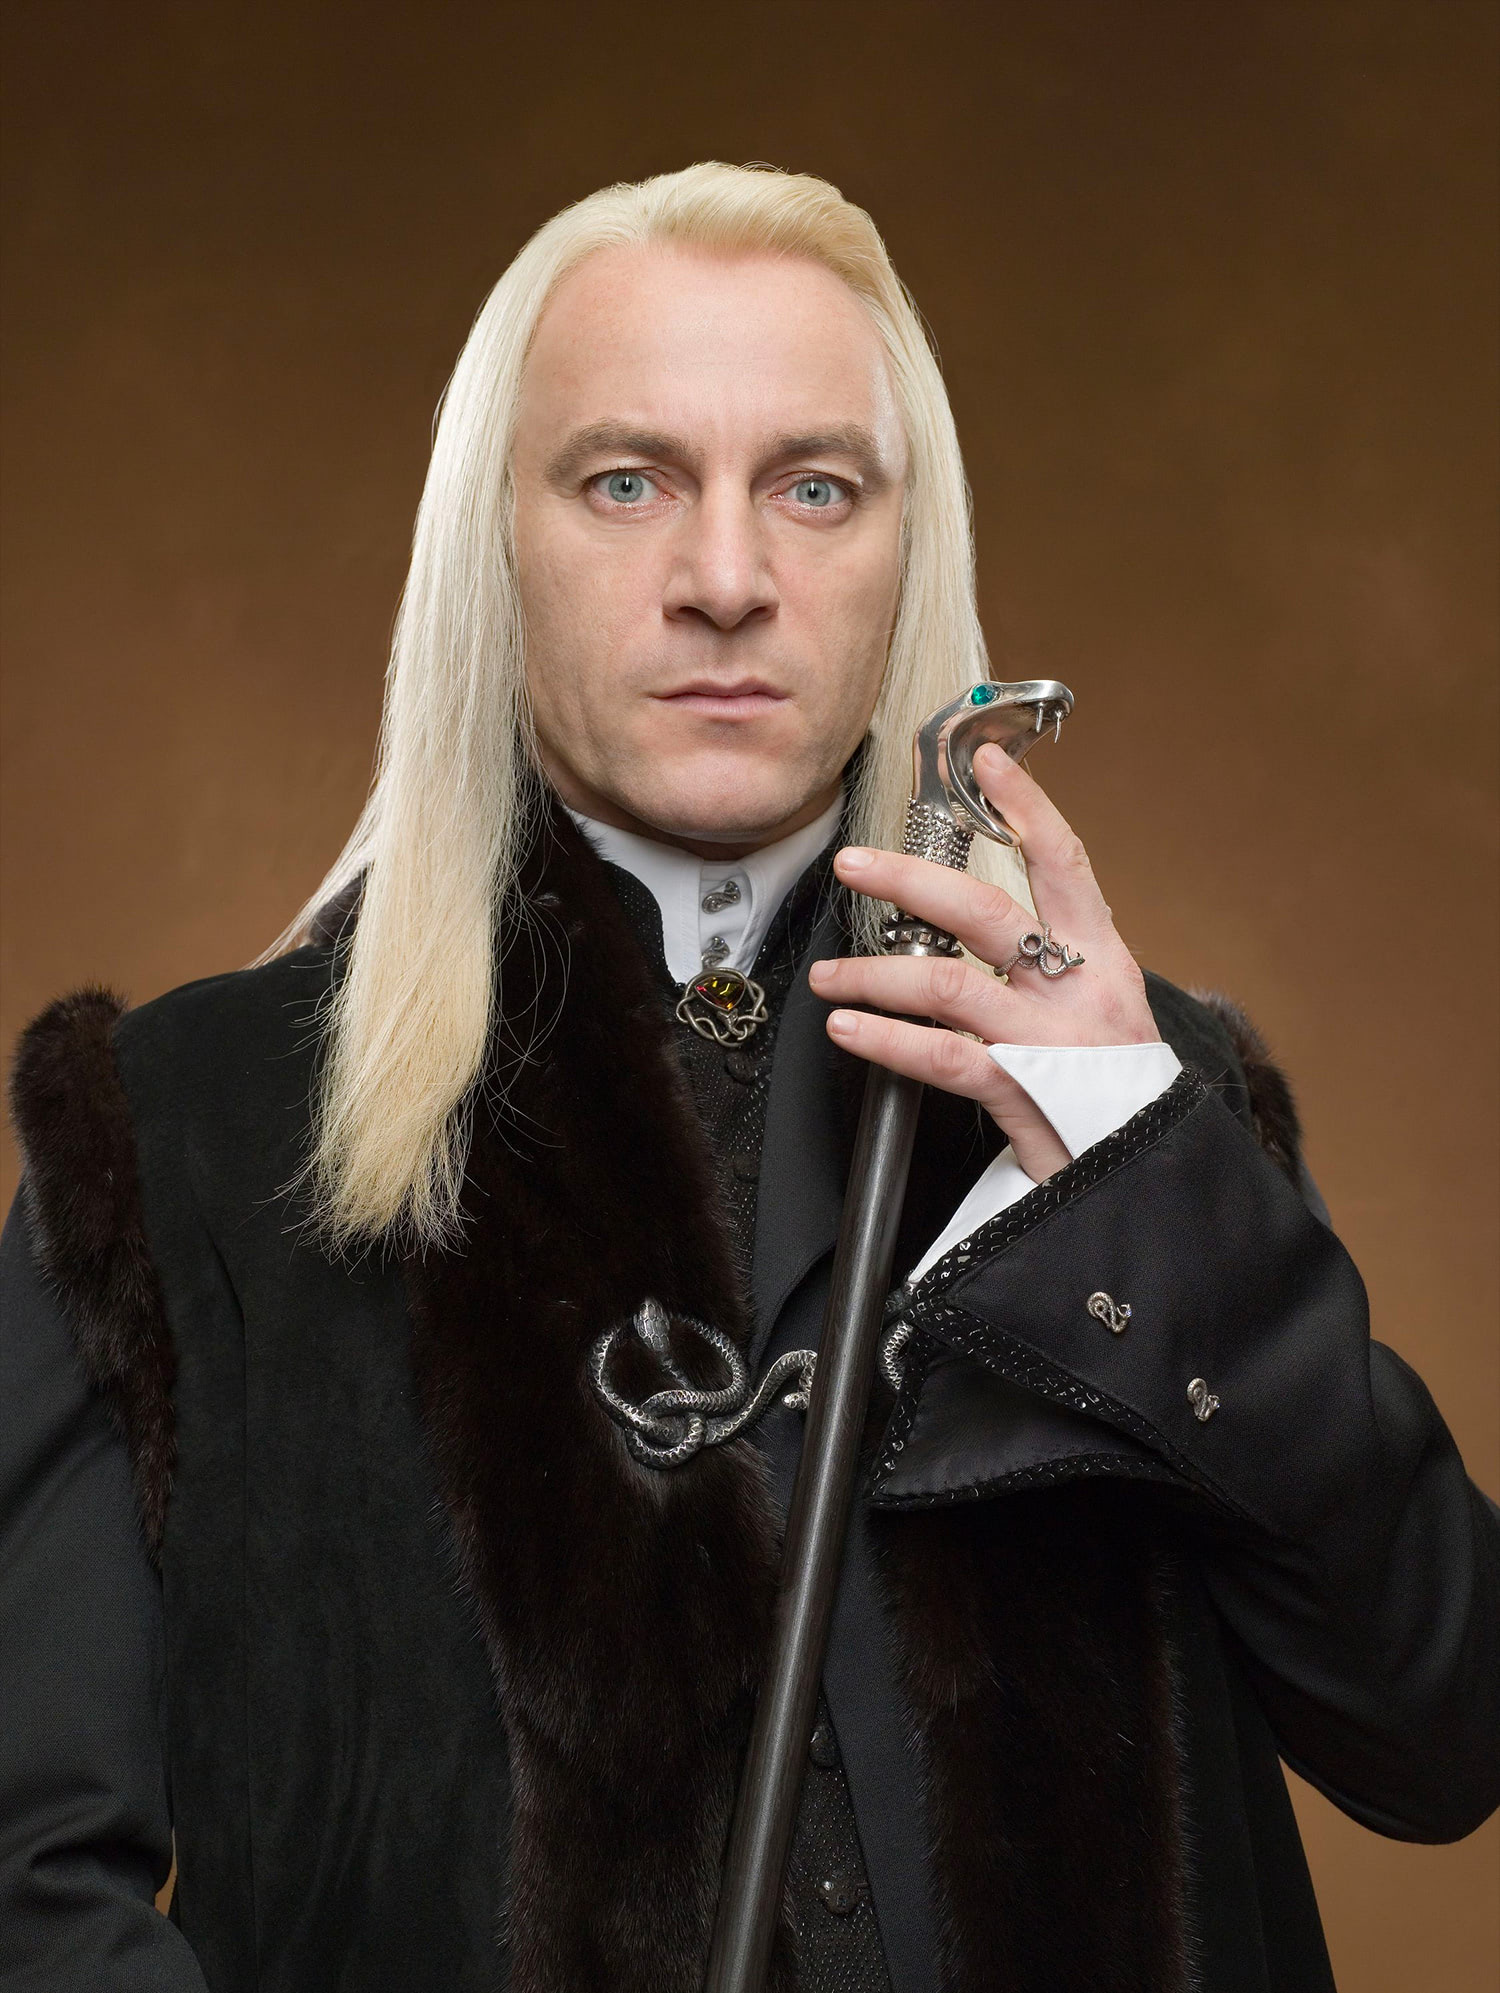 Portrait of Lucius Malfoy